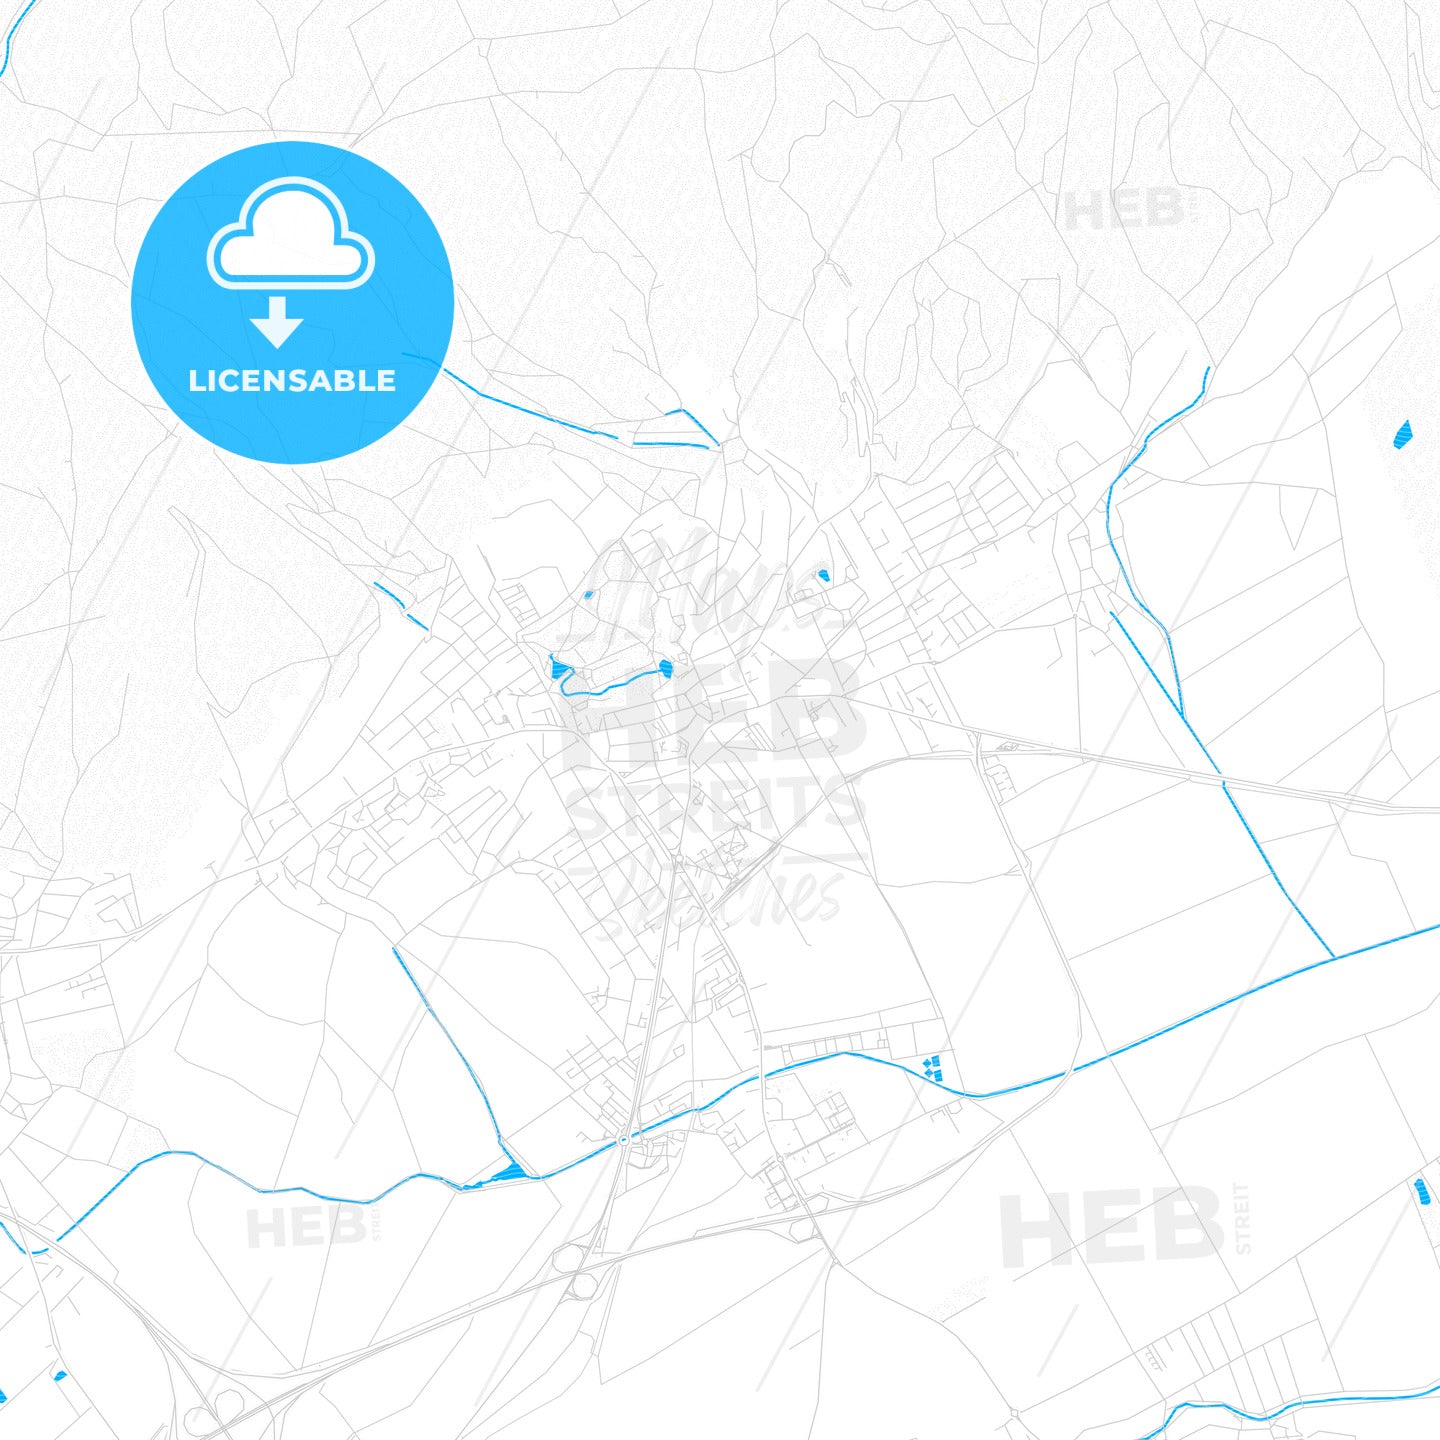 Eisenstadt, Austria PDF vector map with water in focus